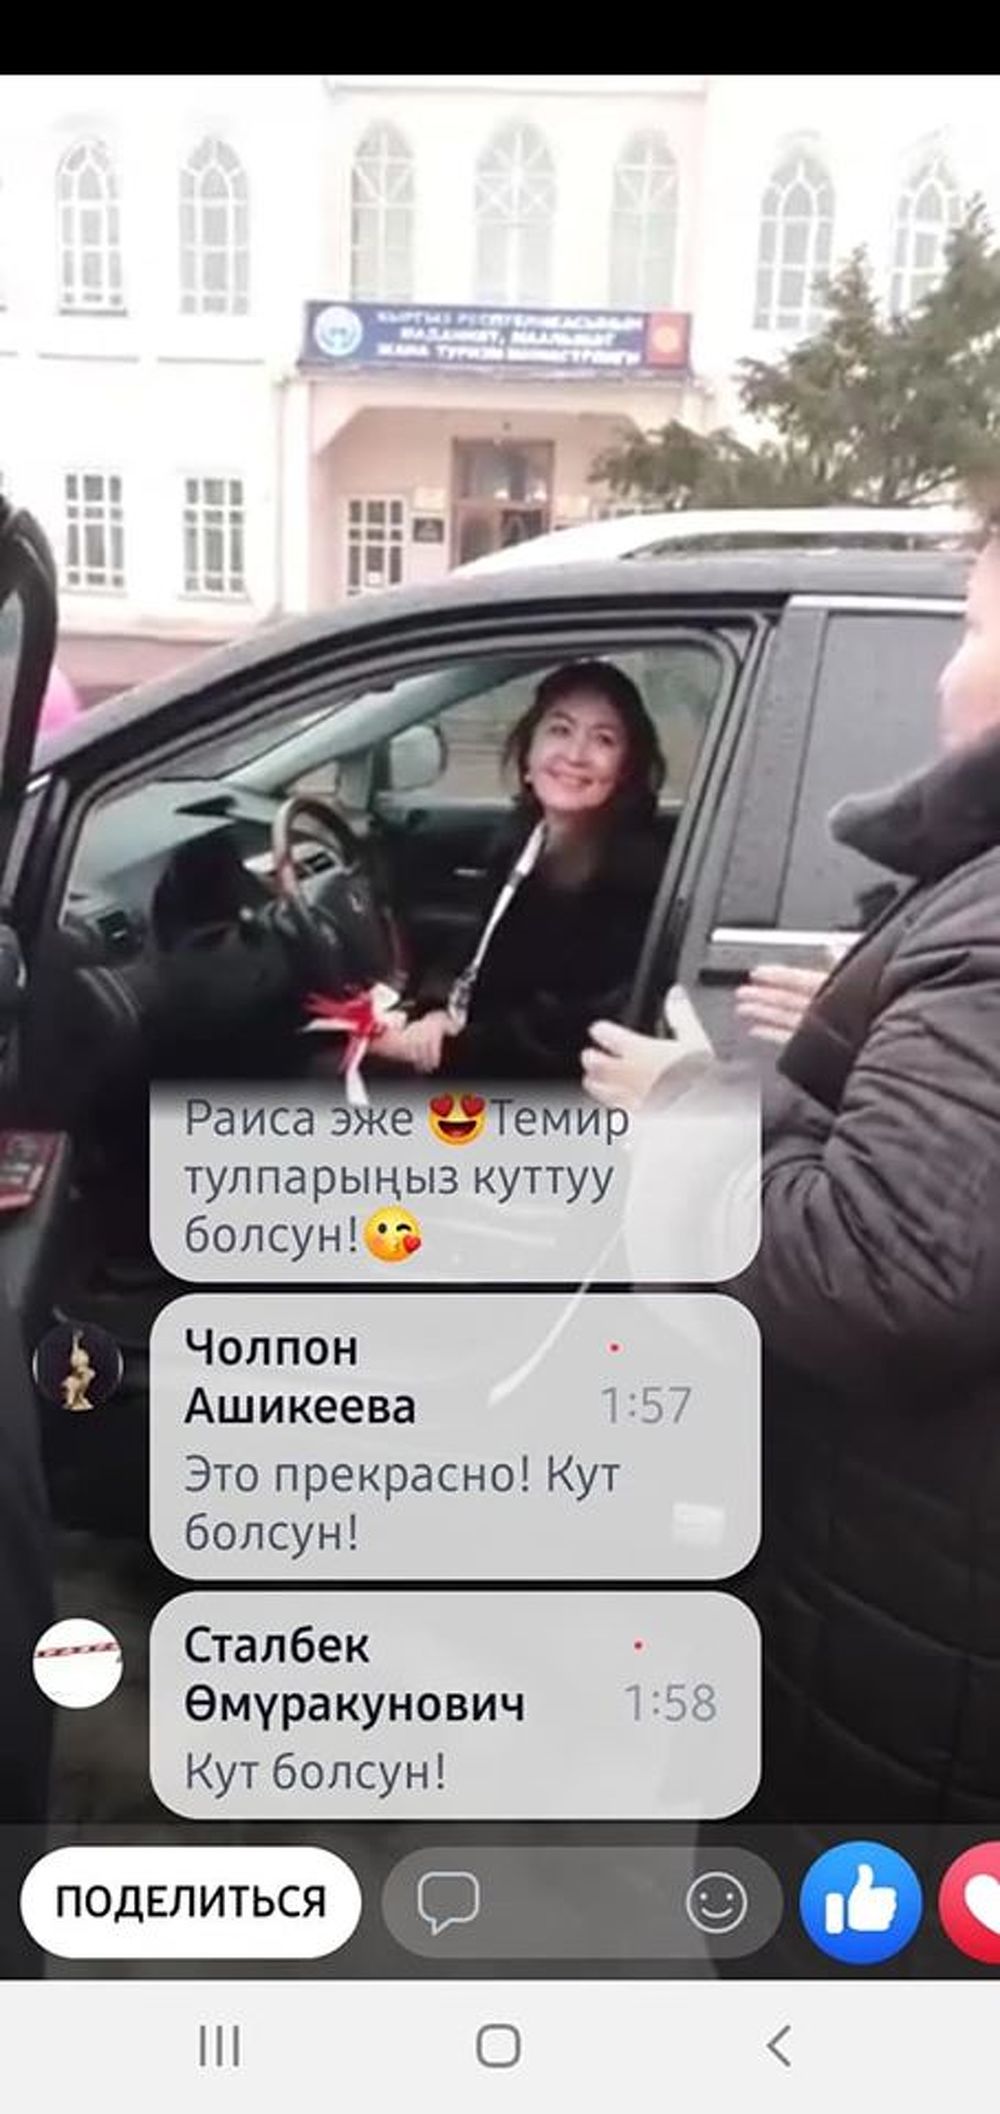 Раисе Атамбаевой машину не дарили — пресс-секретарь главы Татарстана — Today.kg